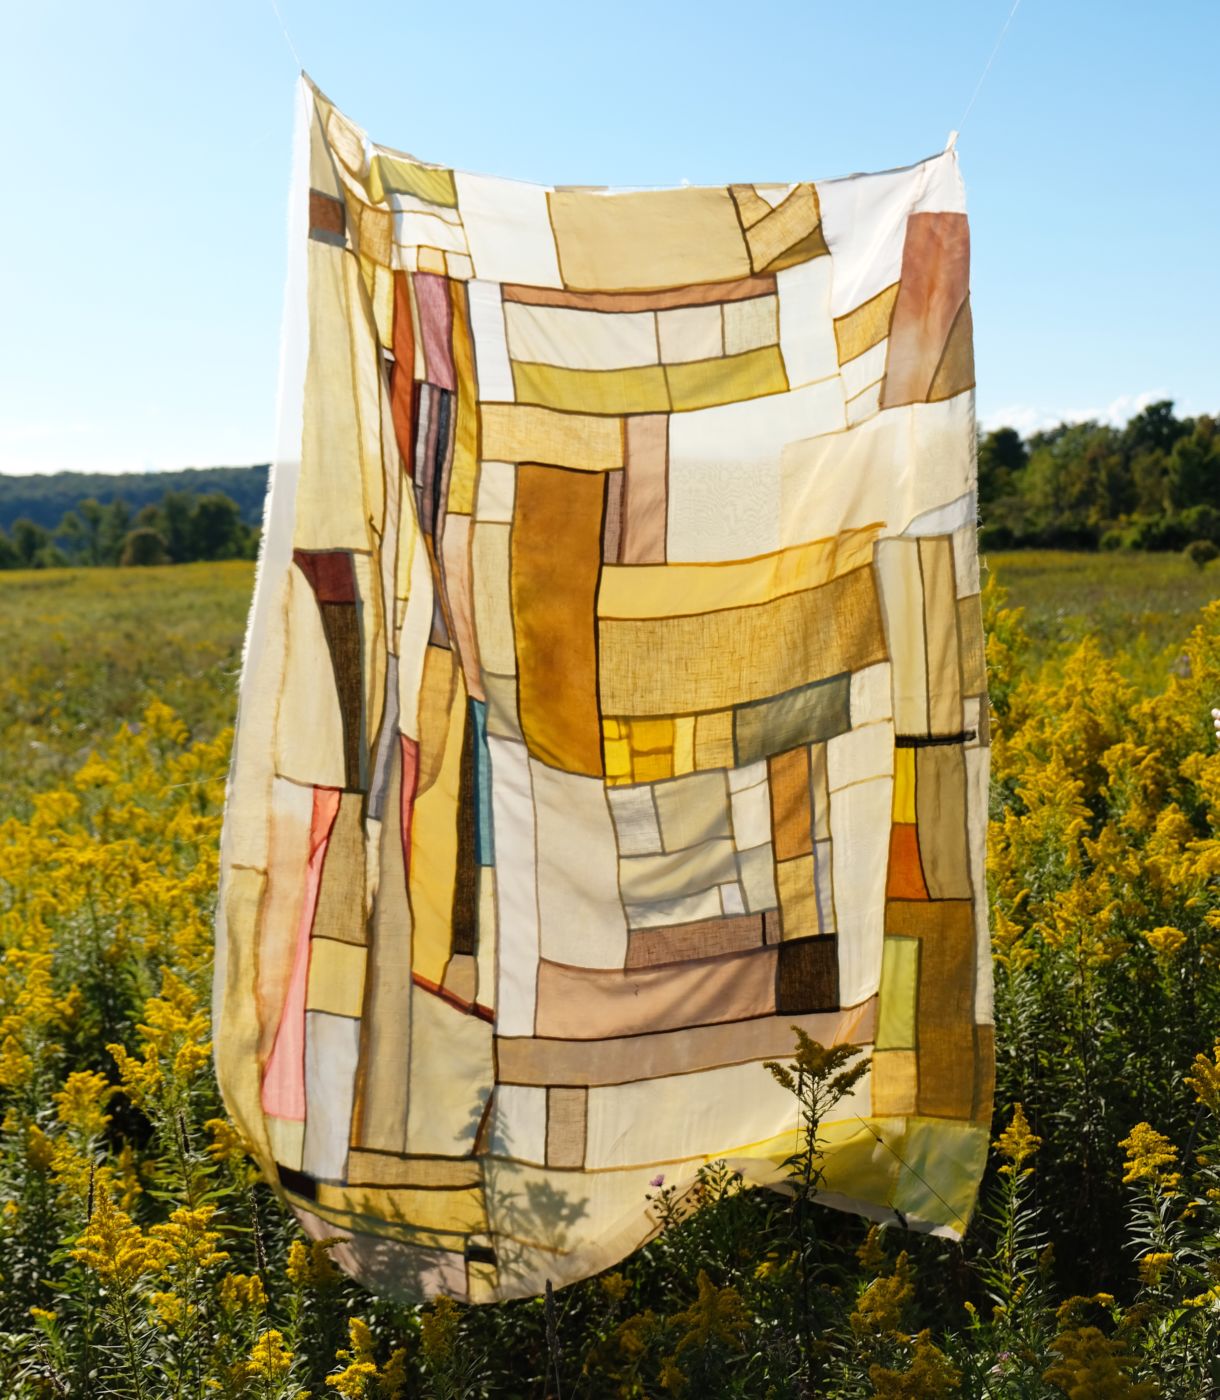 Handmade botanically dyed quilt using goldenrod, turmeric, onion, and sumac. Quilt, dyes, and photo by Kiva Motnyk of Thompson Street Studio.